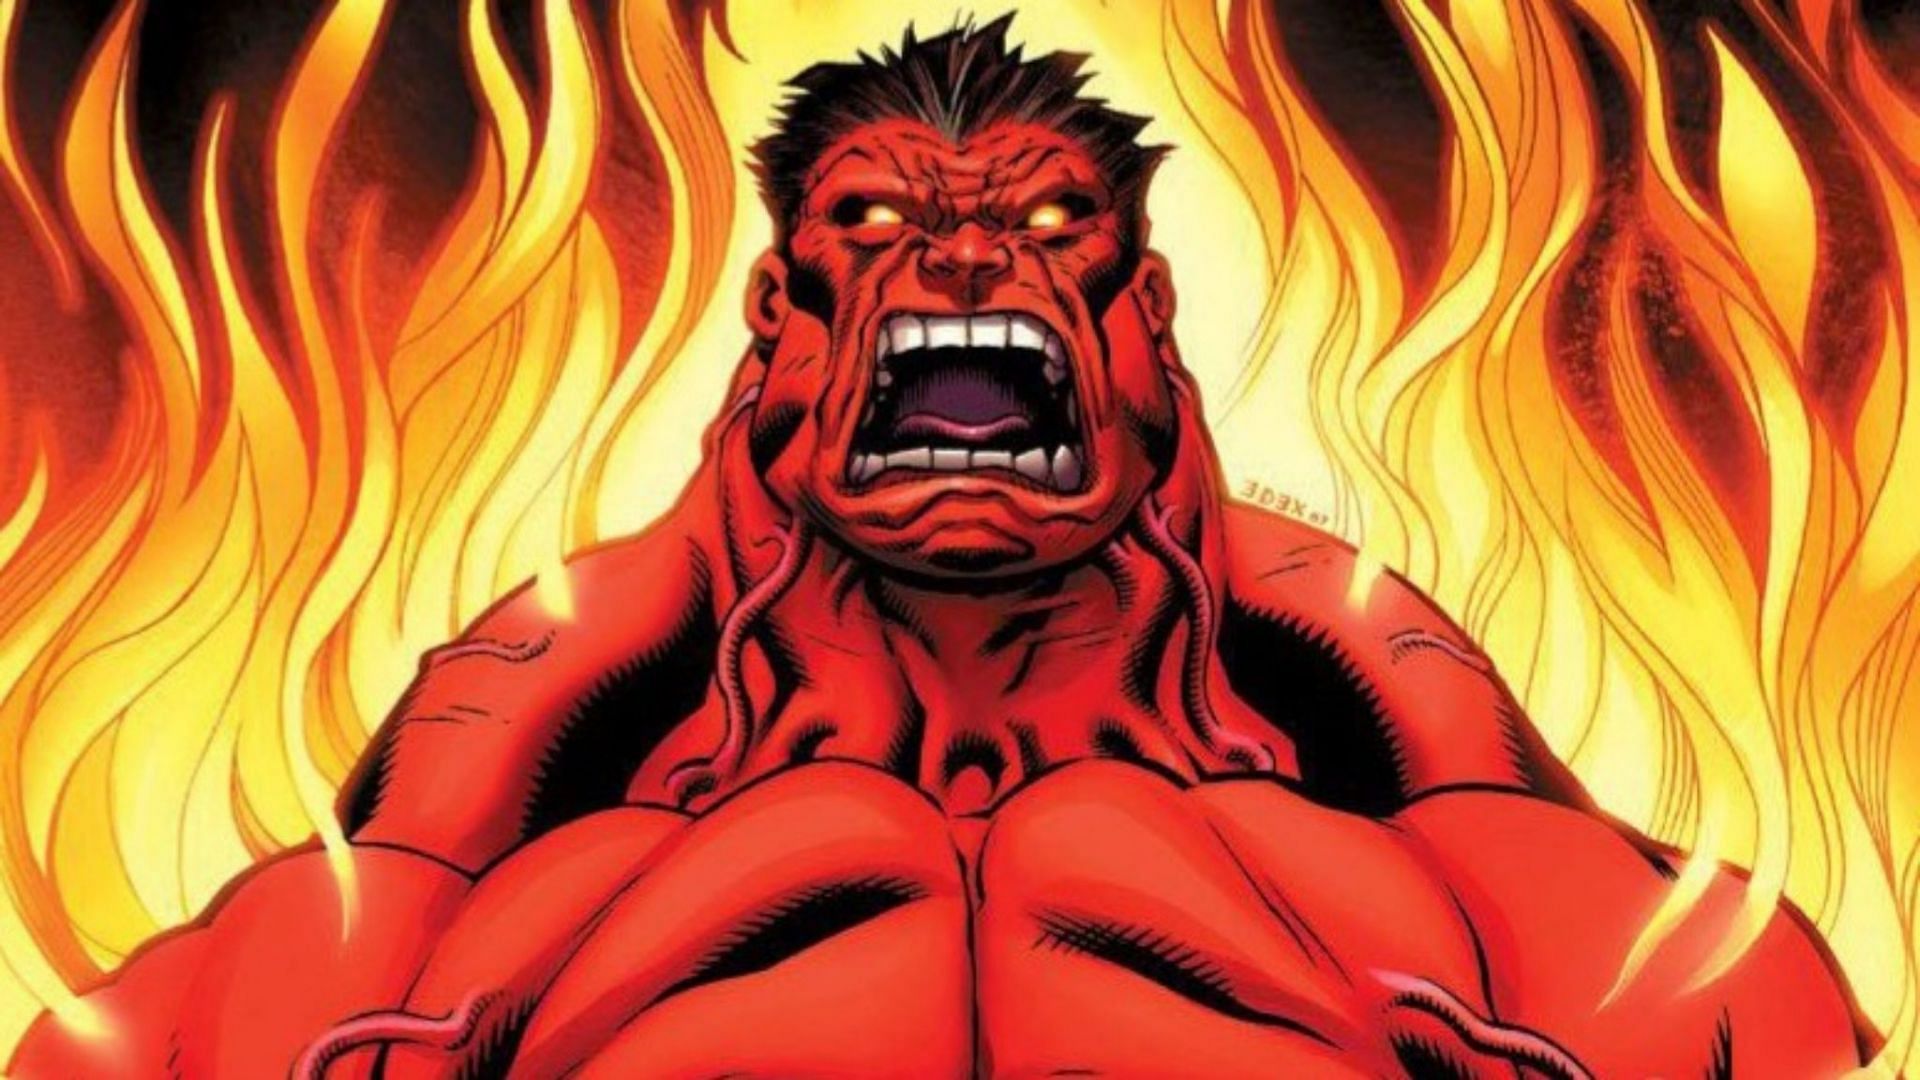 Red Hulk from comics (Image via Marvel Comics)